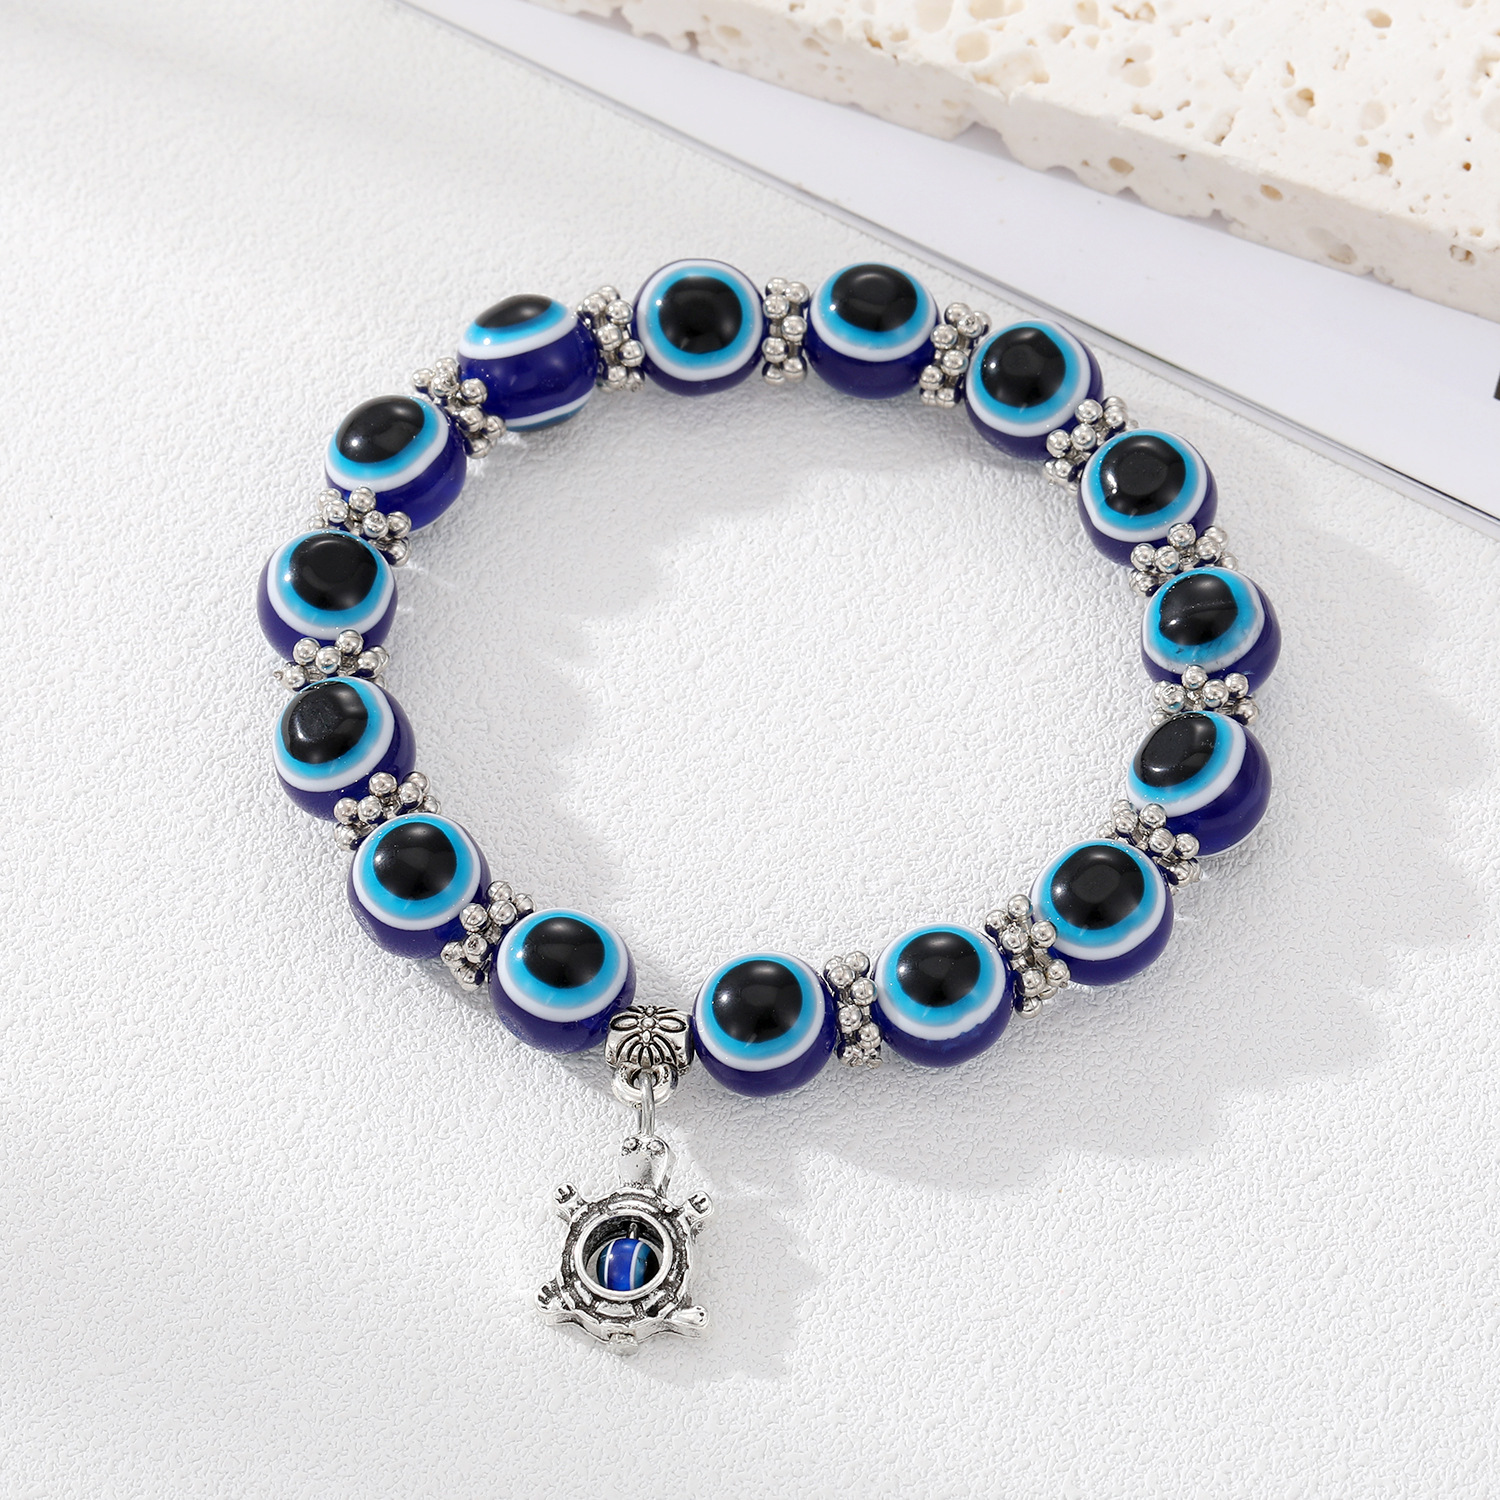 Blue turtle bracelet with large beads